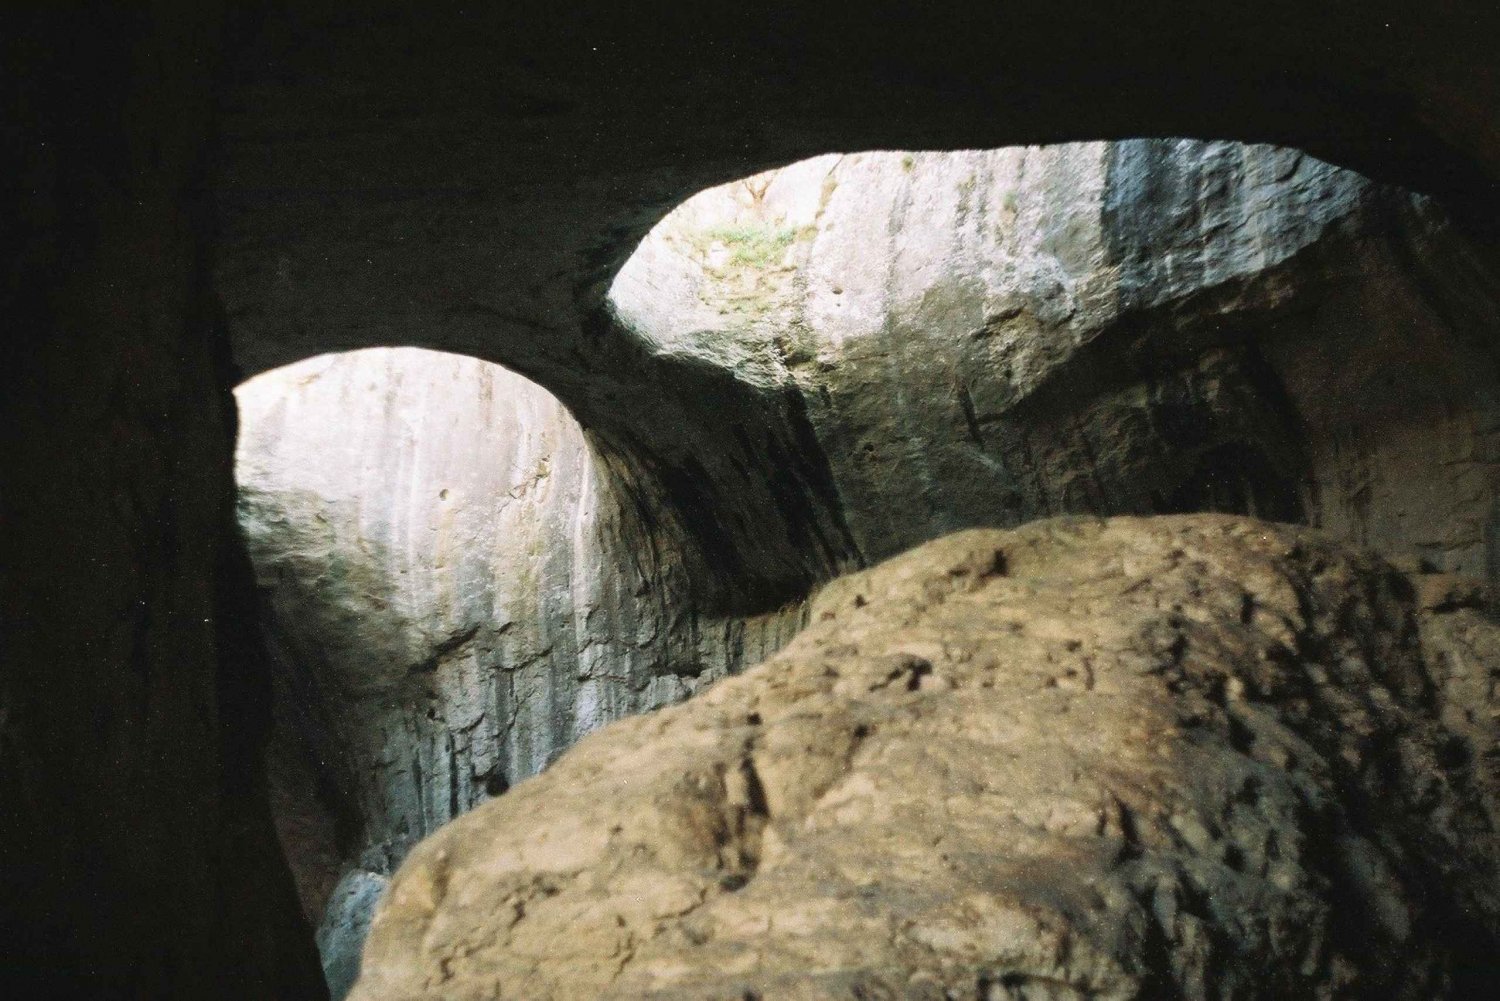 Ab Sofia: Prohodna, Höhle Saeva Dupka und Glozhene